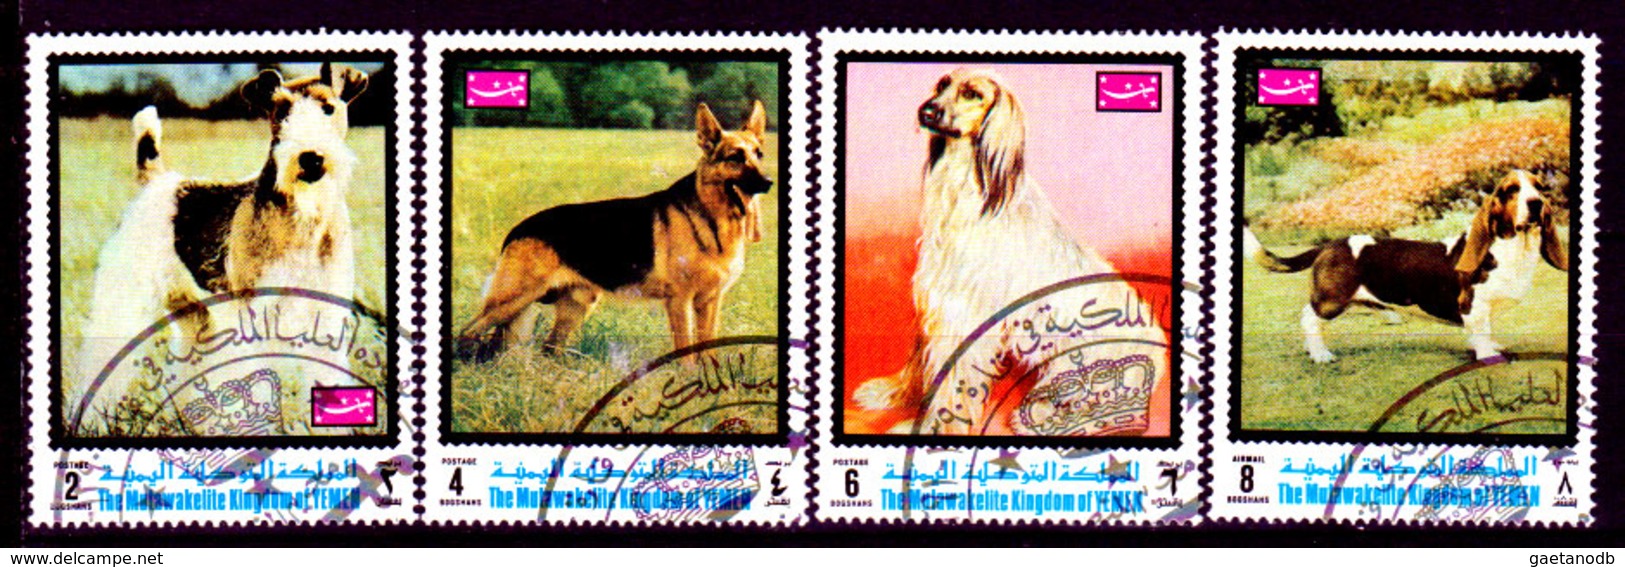 Yemen-0015 - Cani (o) Used - Senza Difetti Occulti. - Yemen